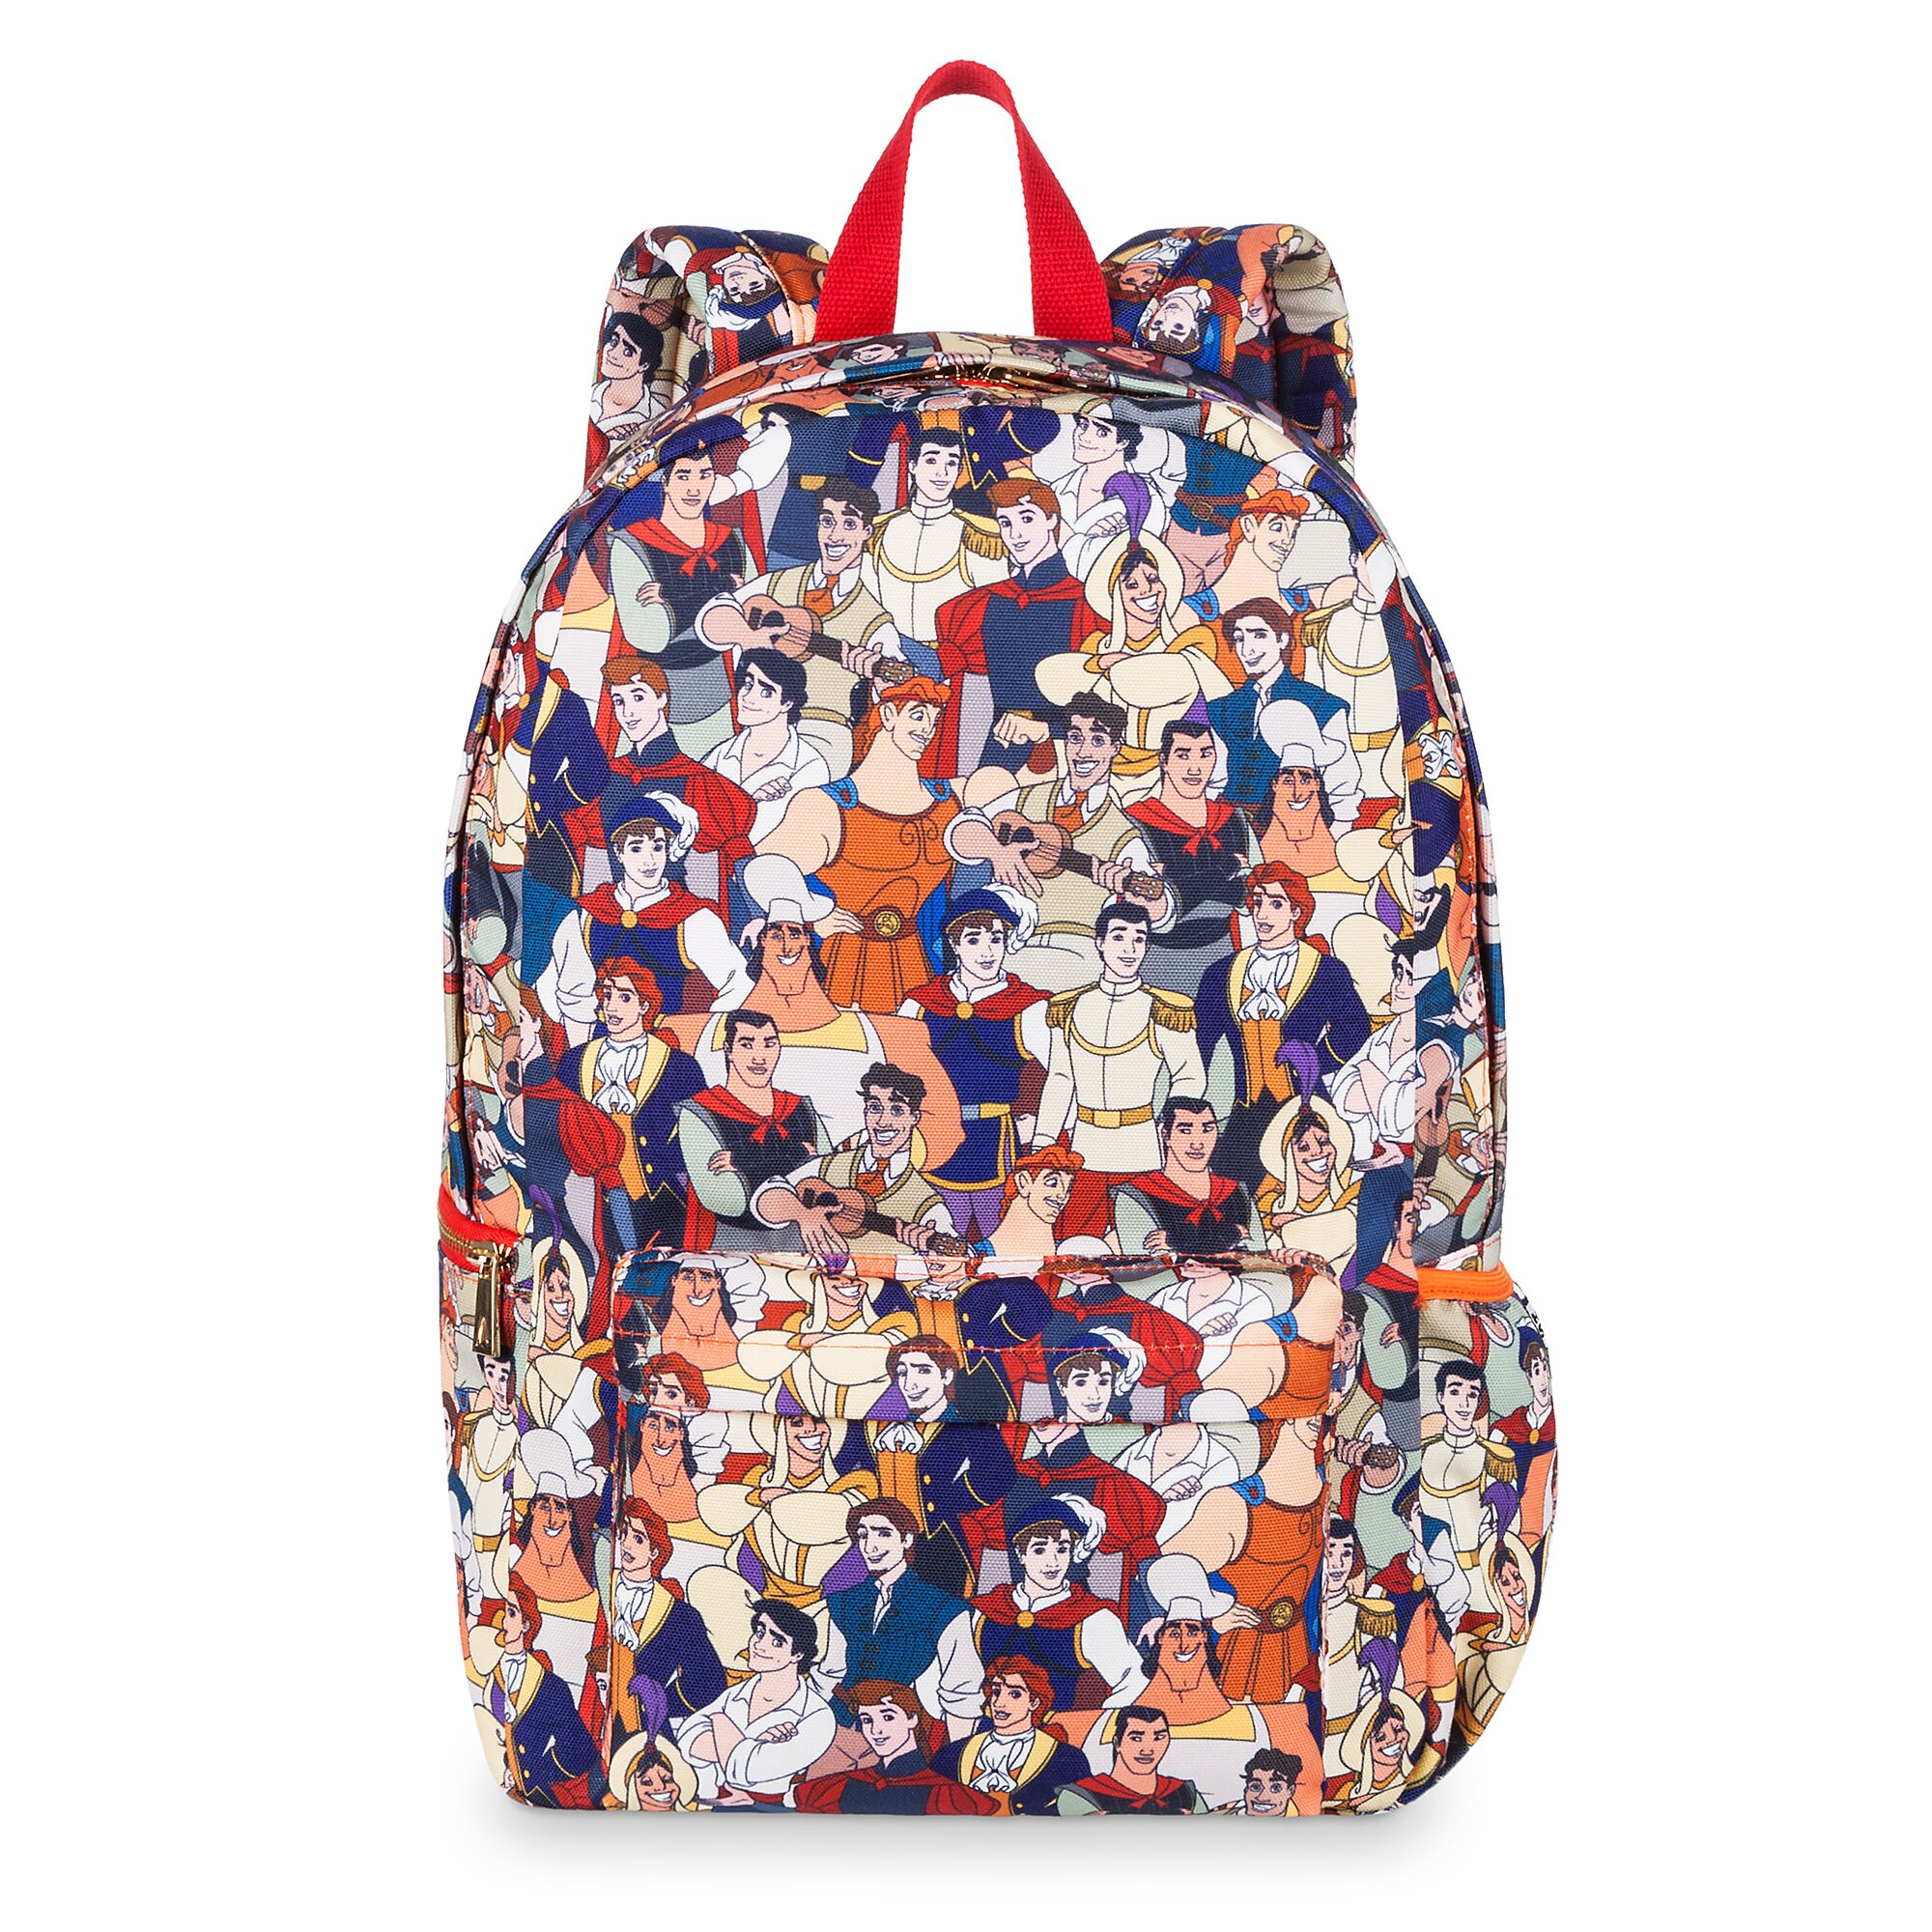 Disney Prince Backpack - Oh My Disney